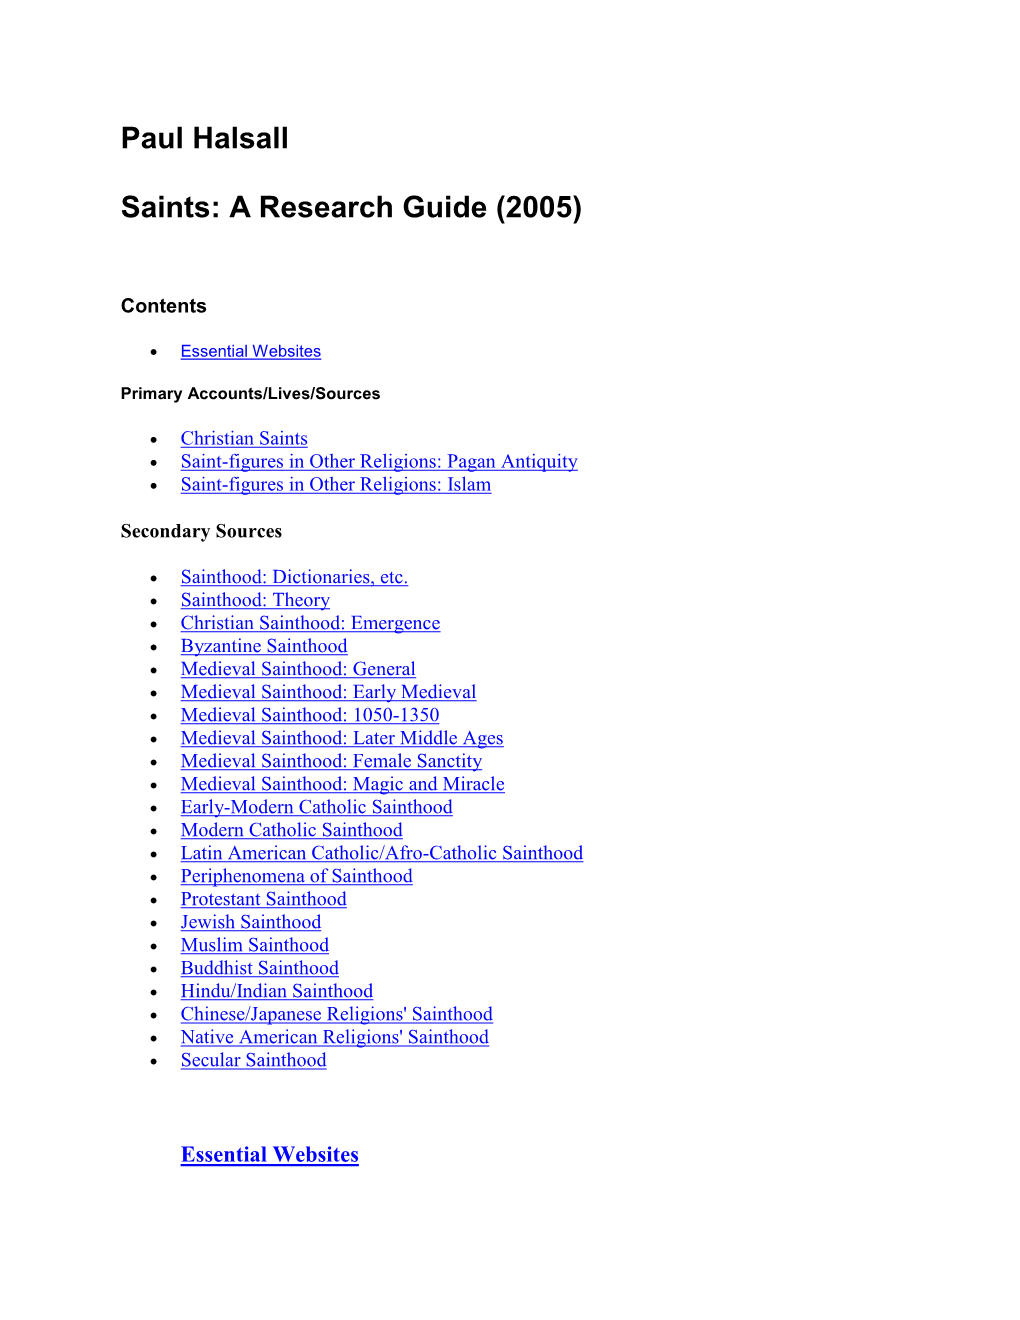 Paul Halsall Saints: a Research Guide (2005)